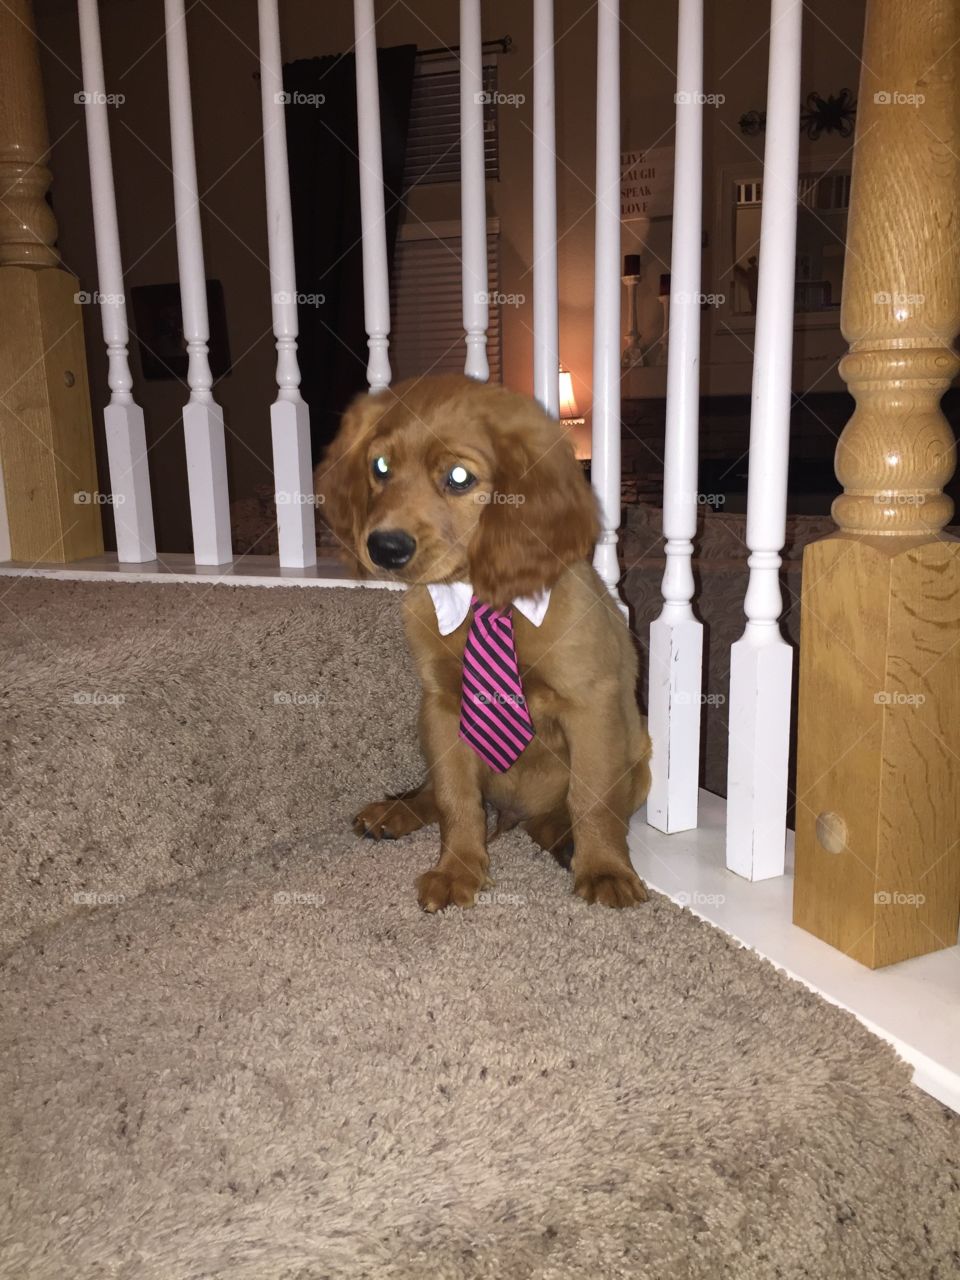 Fancy Buster in his tie.